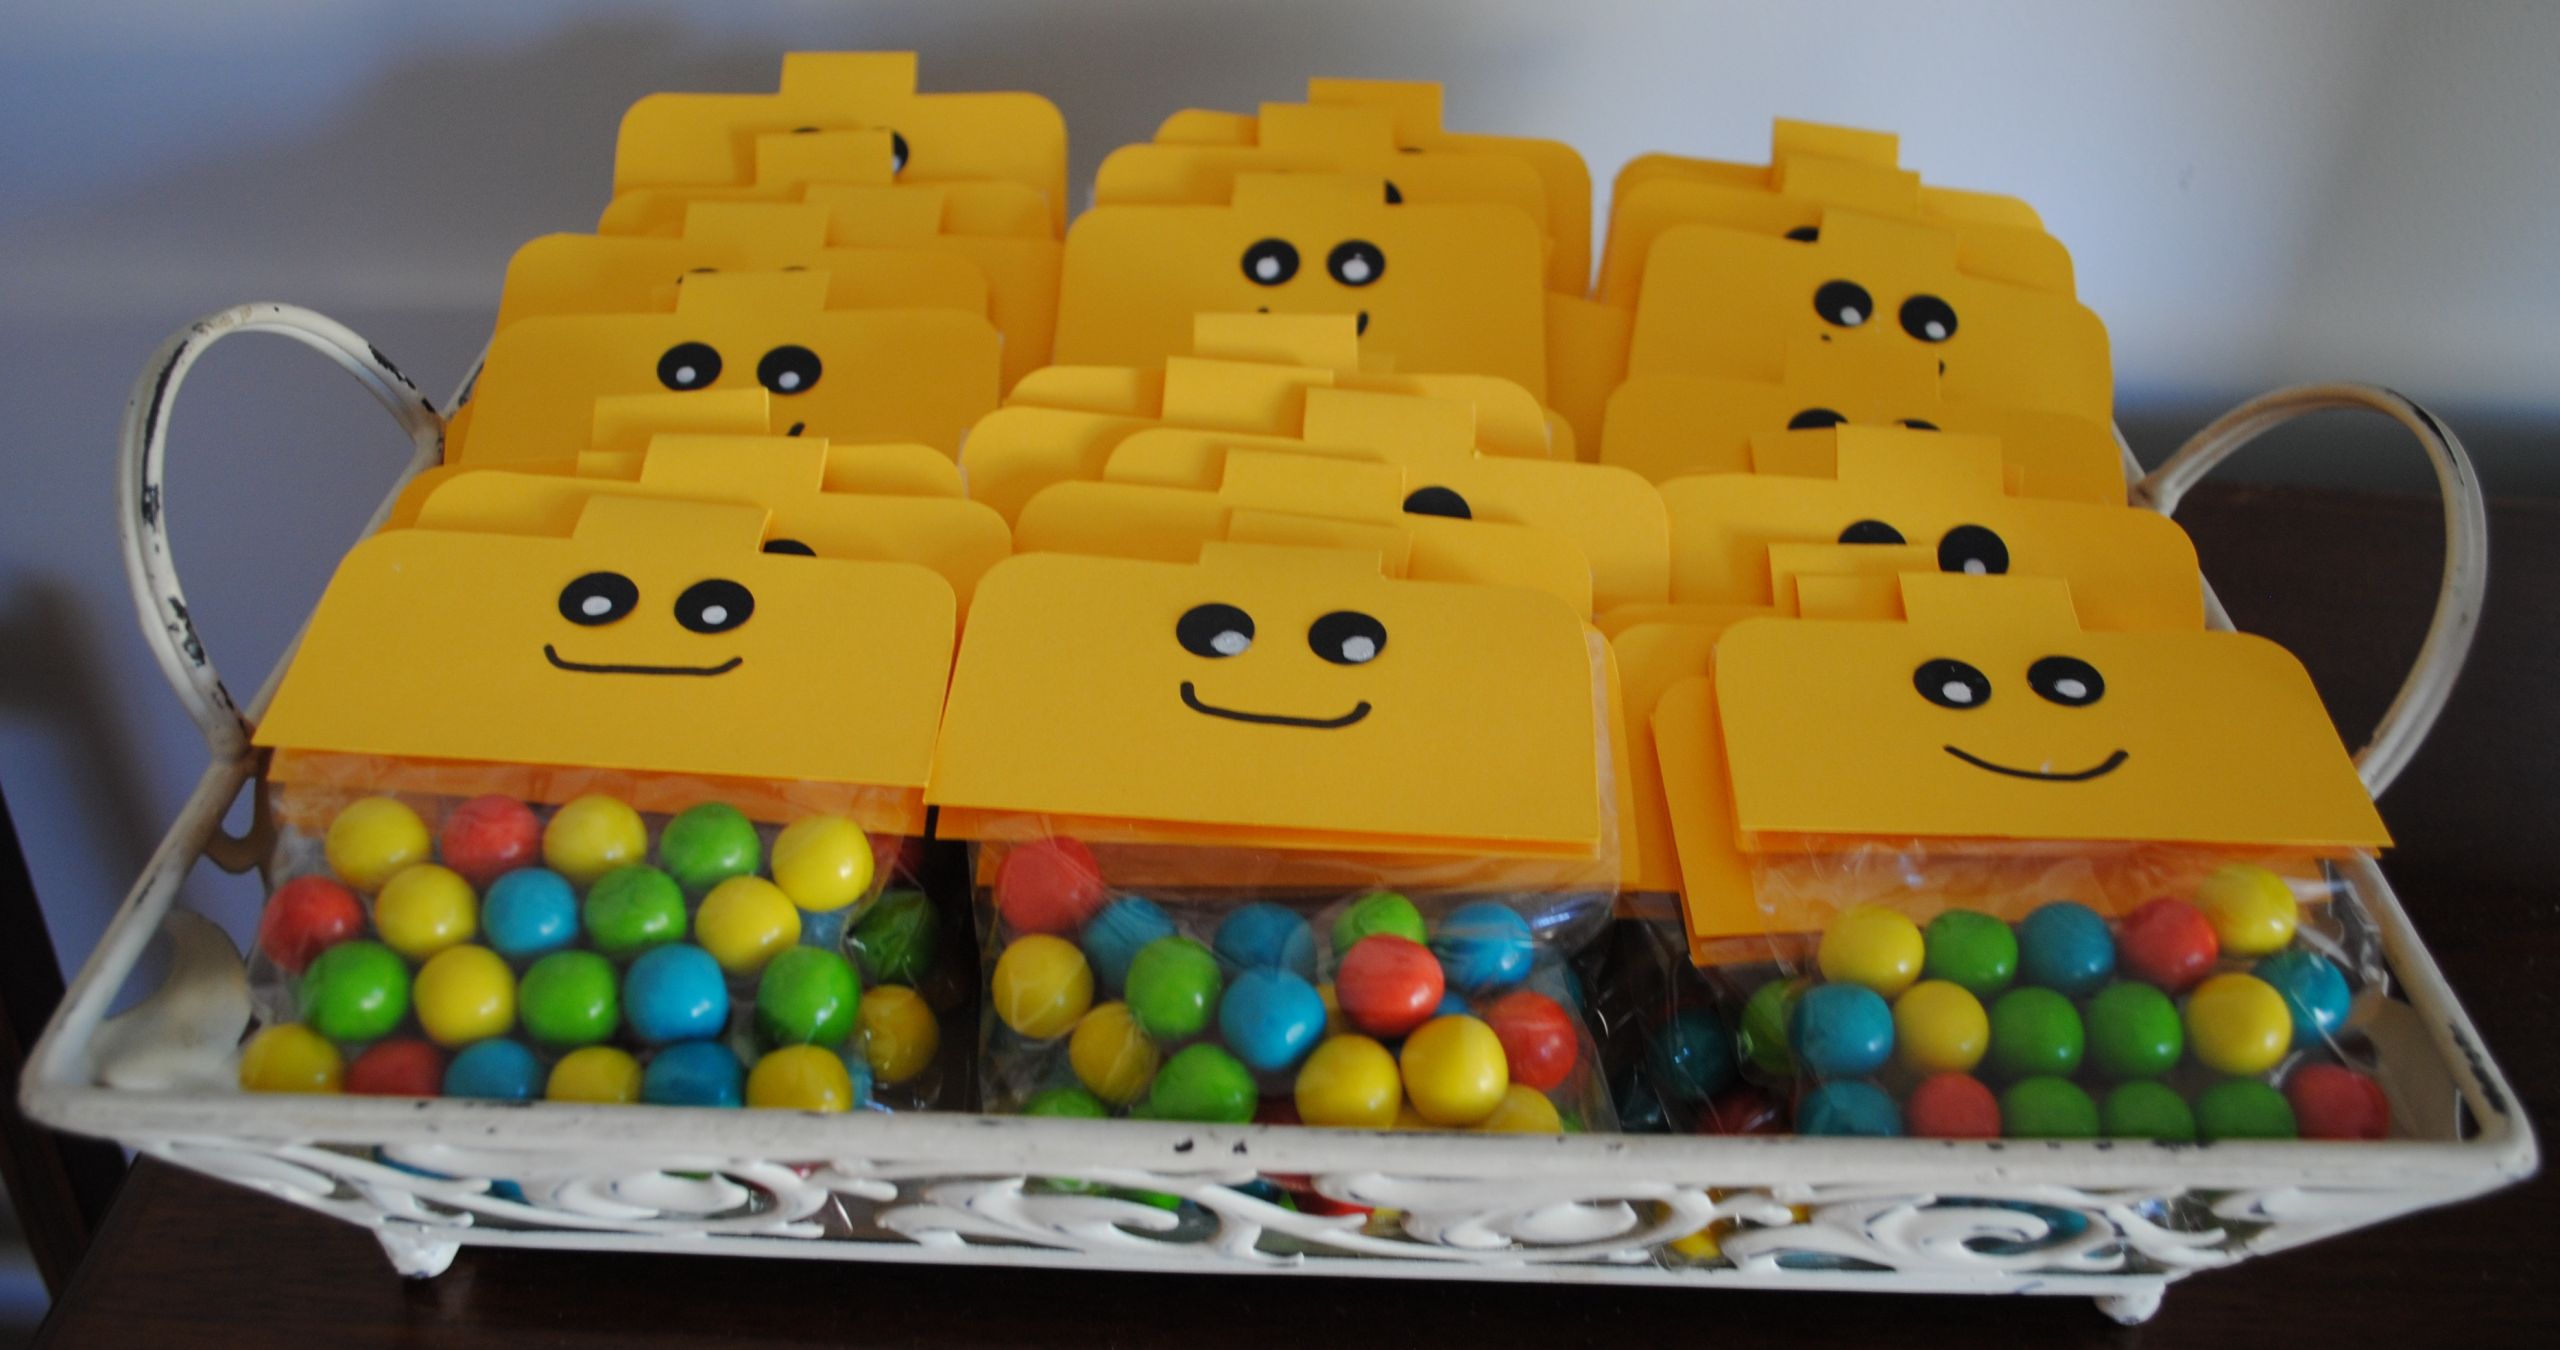 Lego Birthday Party Kit
 Oscar’s Lego Party